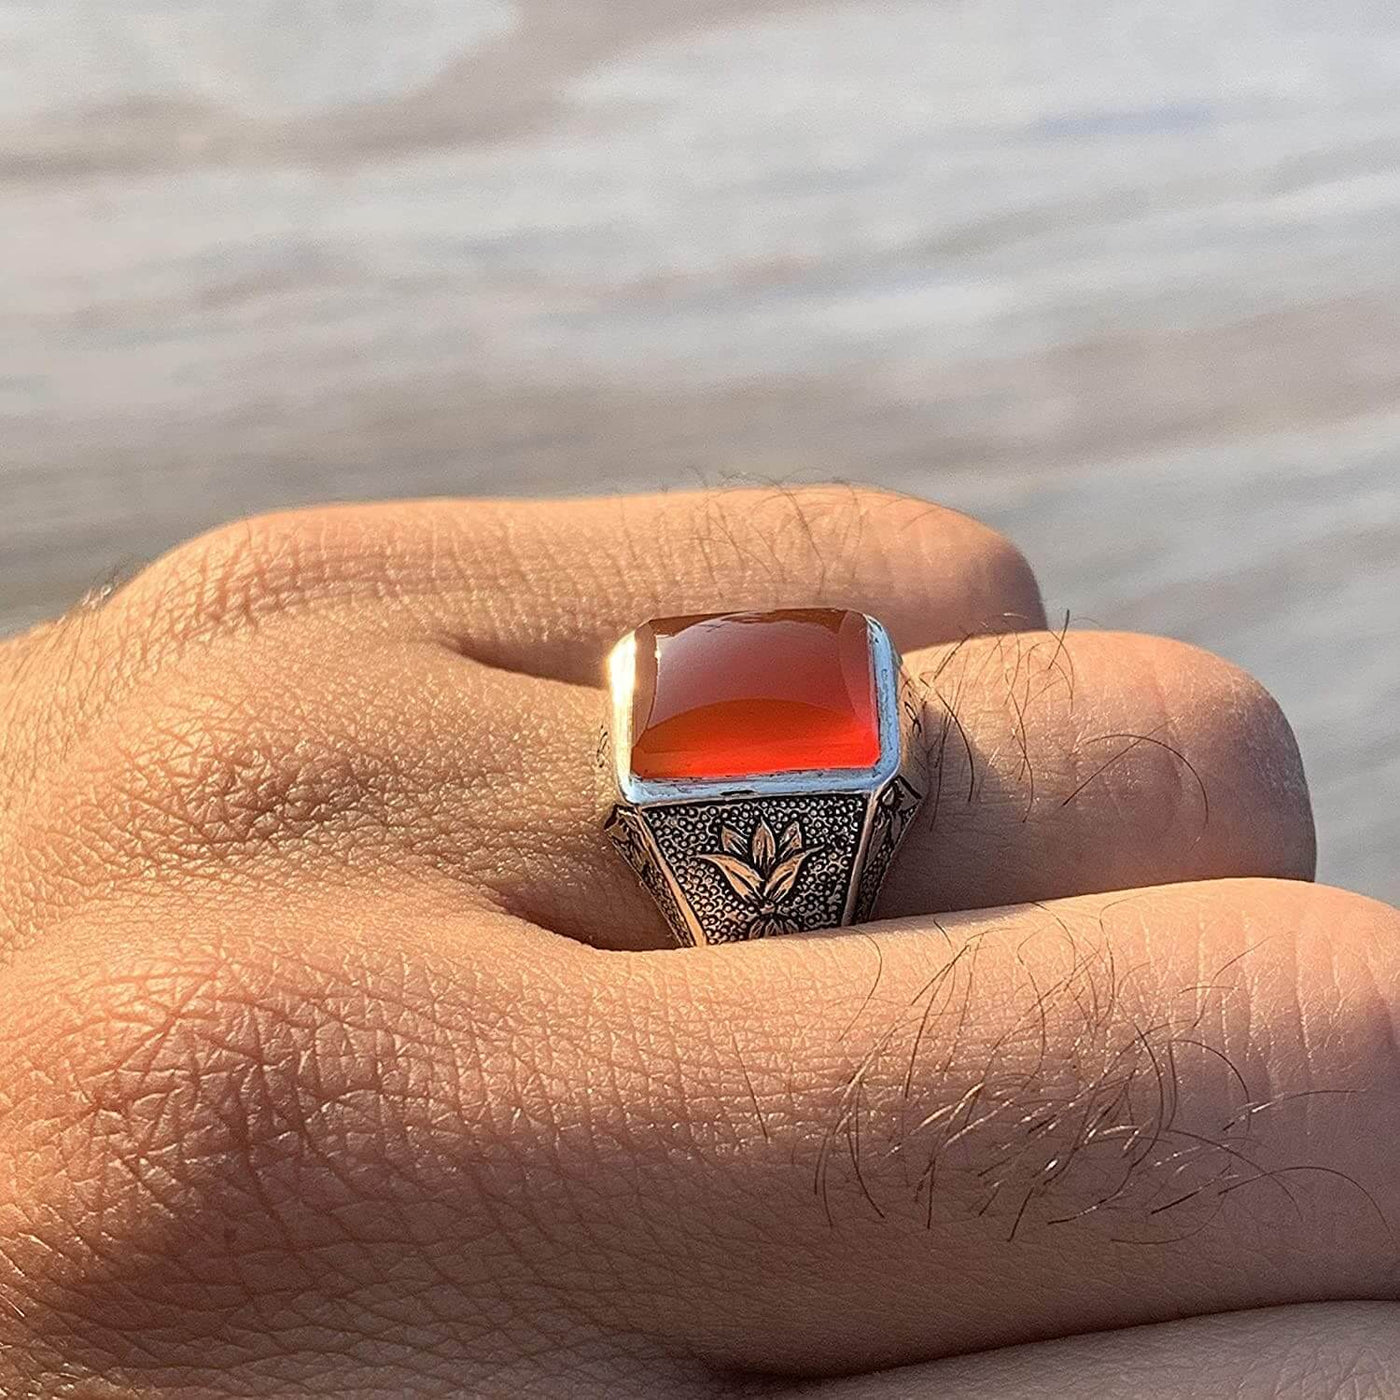 Red Aqeeq Ring Men | Yemeni Aqeeq Ring | Diamond Cut Plain Red Aqeeq | Fully Handmade Sterling Silver 925 US Size 10 - Al Ali Gems